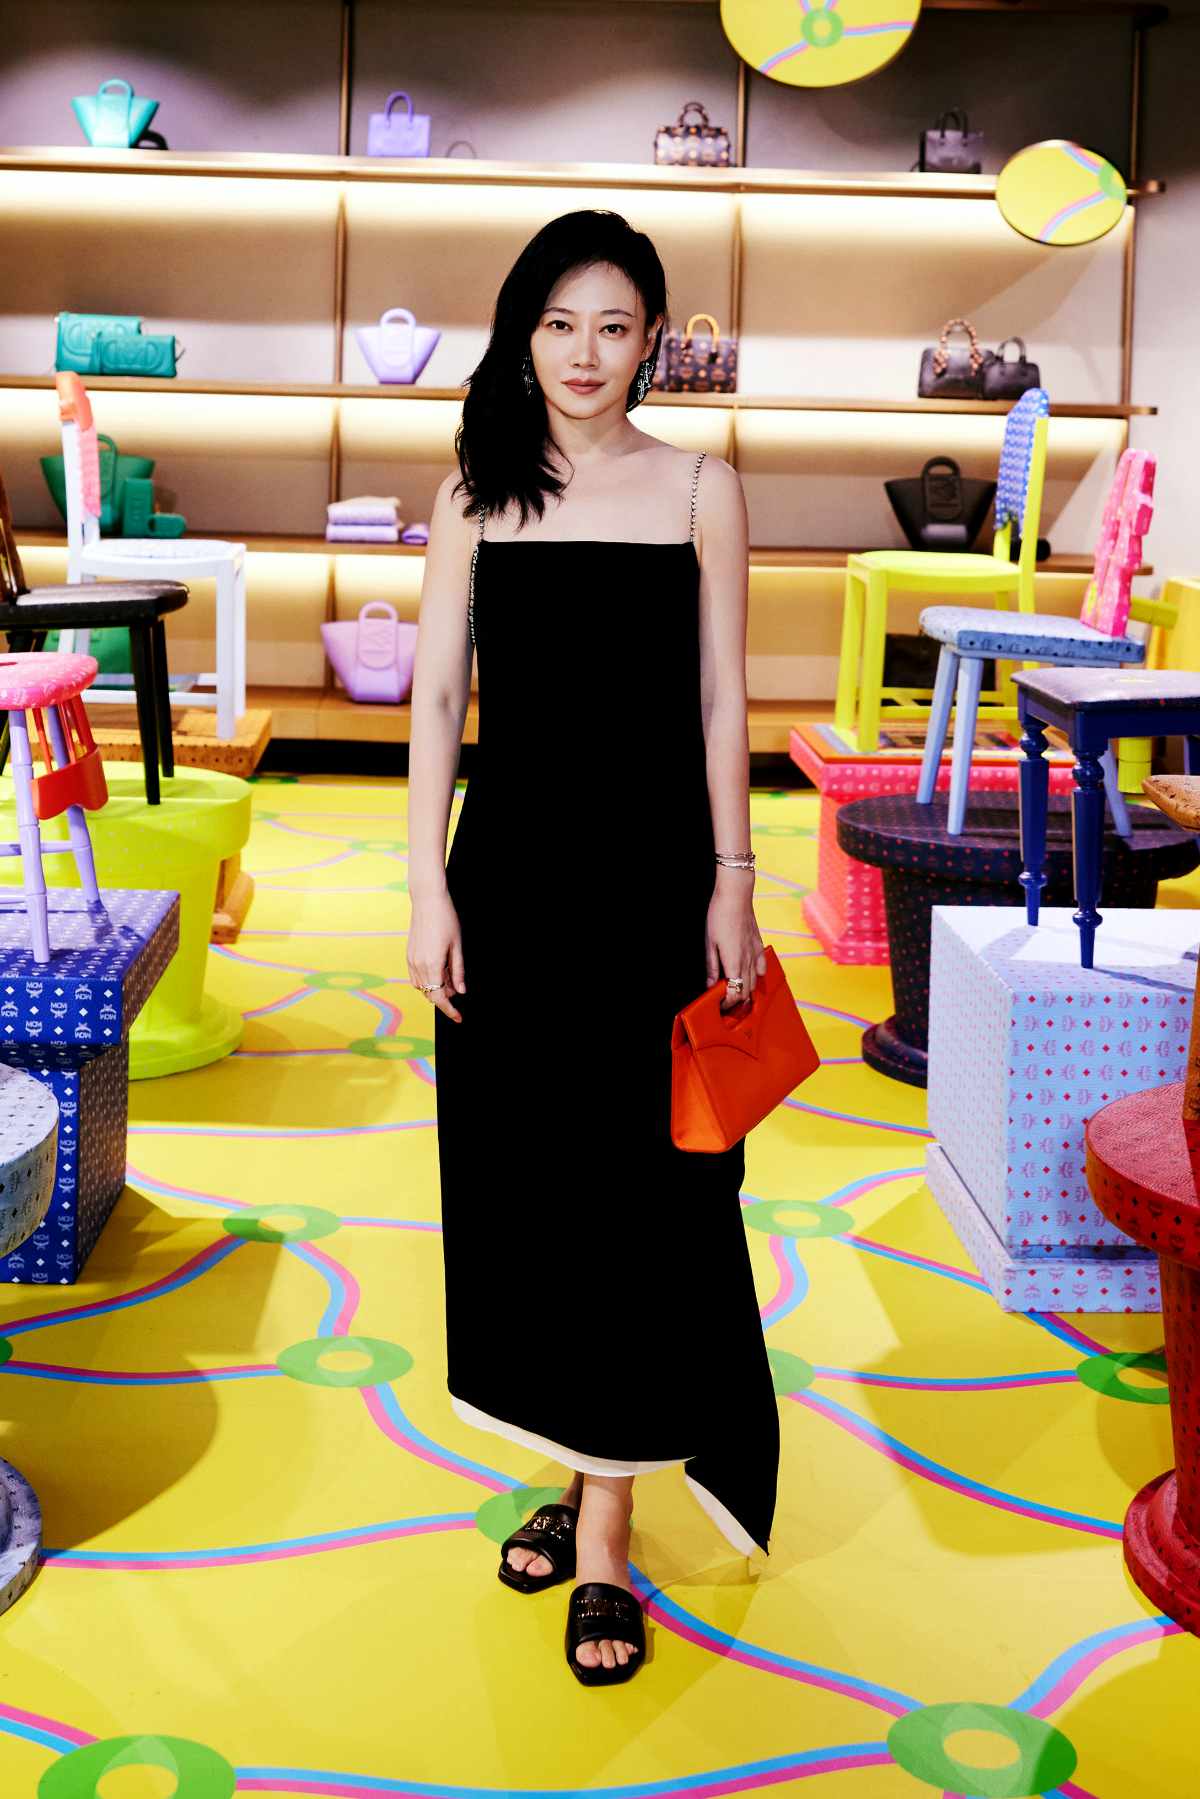 MCM Celebrated Art-Fashion Collaboration With Artist Yinka Ilori In Seoul